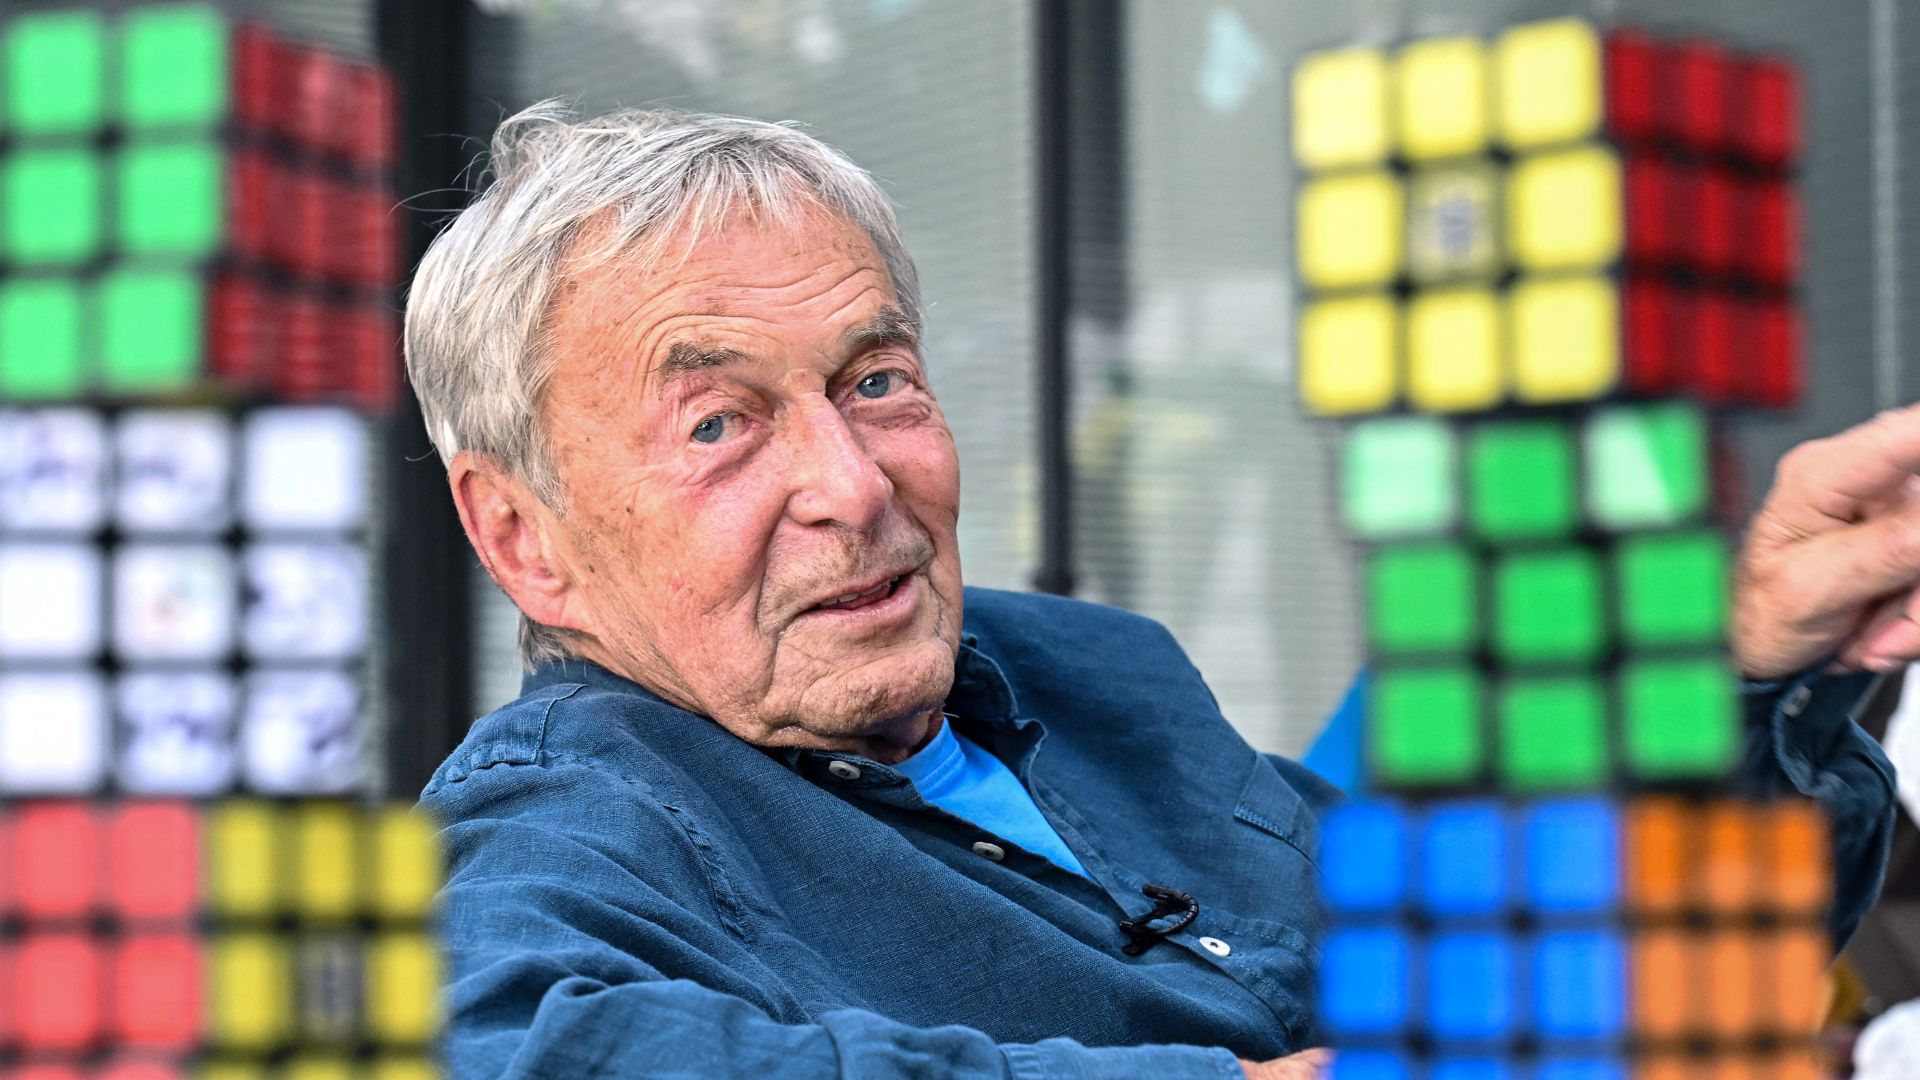 Hungarian inventor Erno Rubik sits next to several Rubik's Cubes.
/Attila Kisbenedek/AFP
